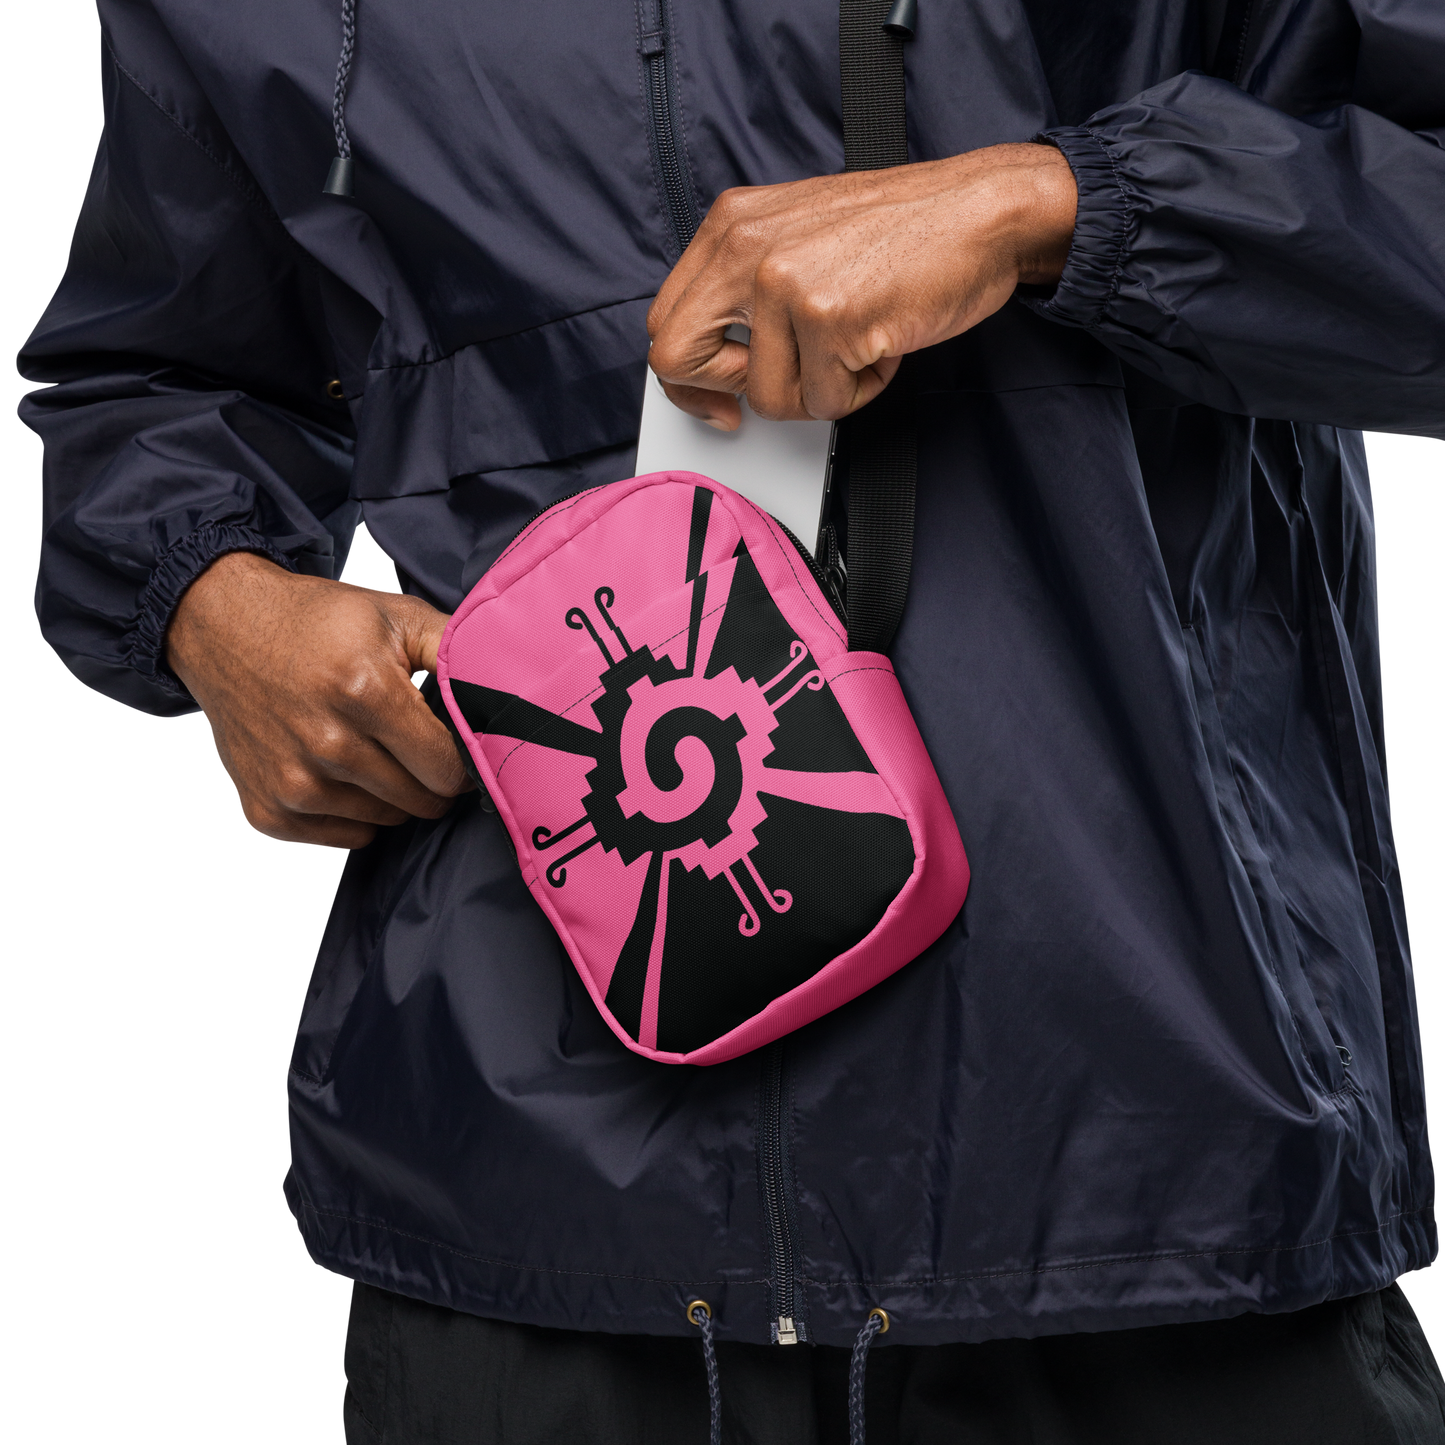 Nahui Papalotl or Hunab Ku (Pink & Black) - Unisex Crossbody Bag